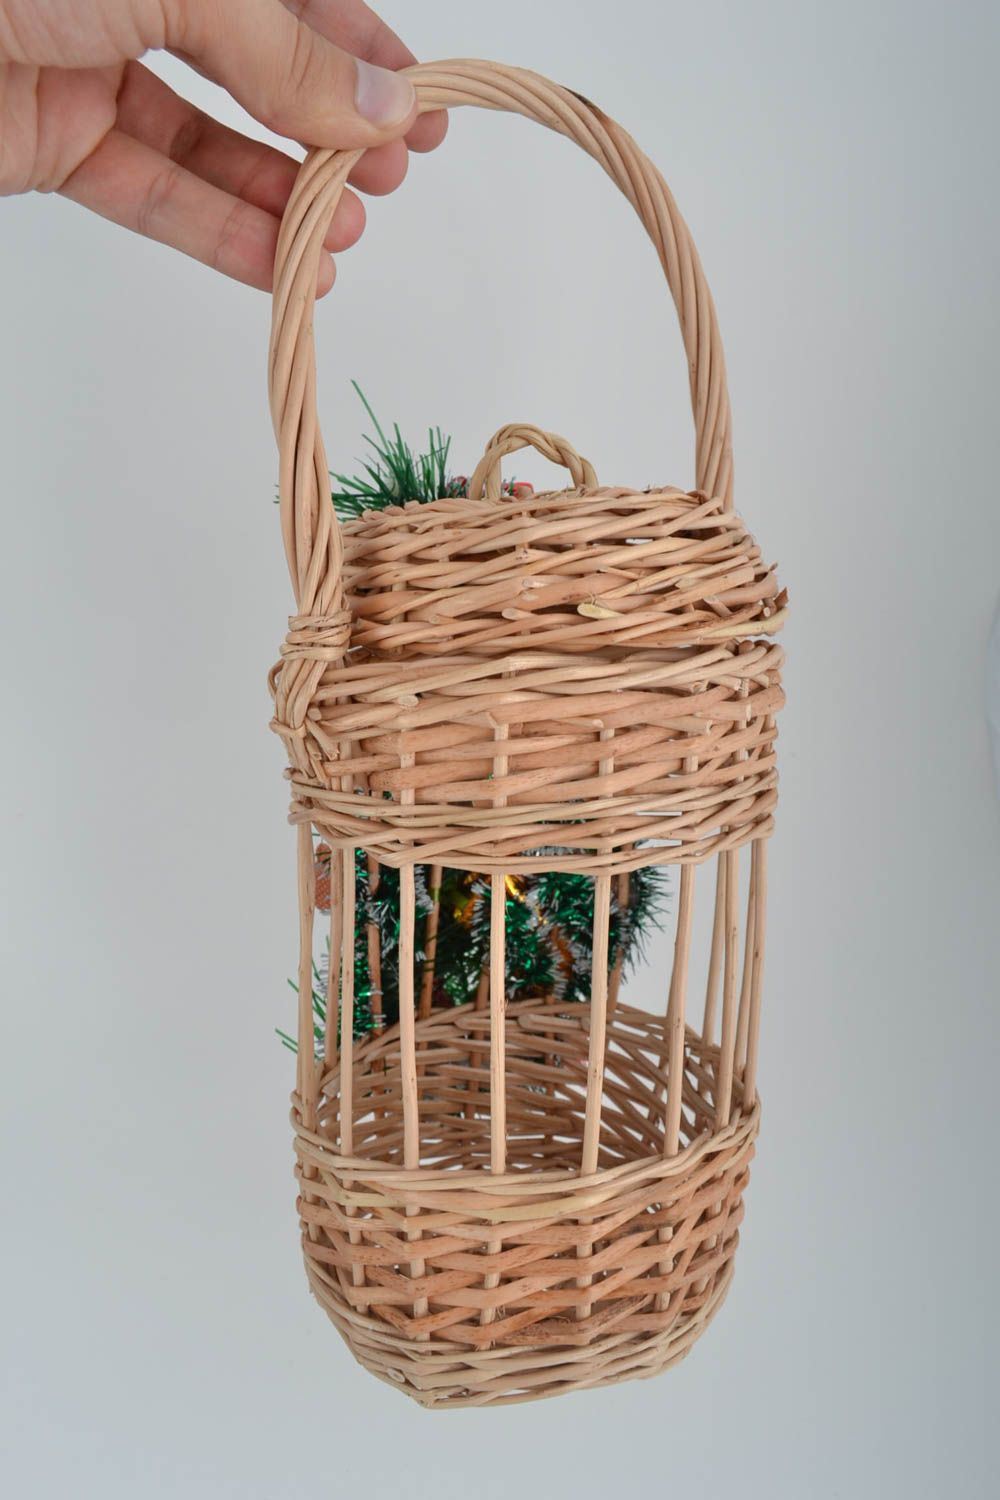 Unusual handmade woven basket Easter basket ideas designer accessories photo 5